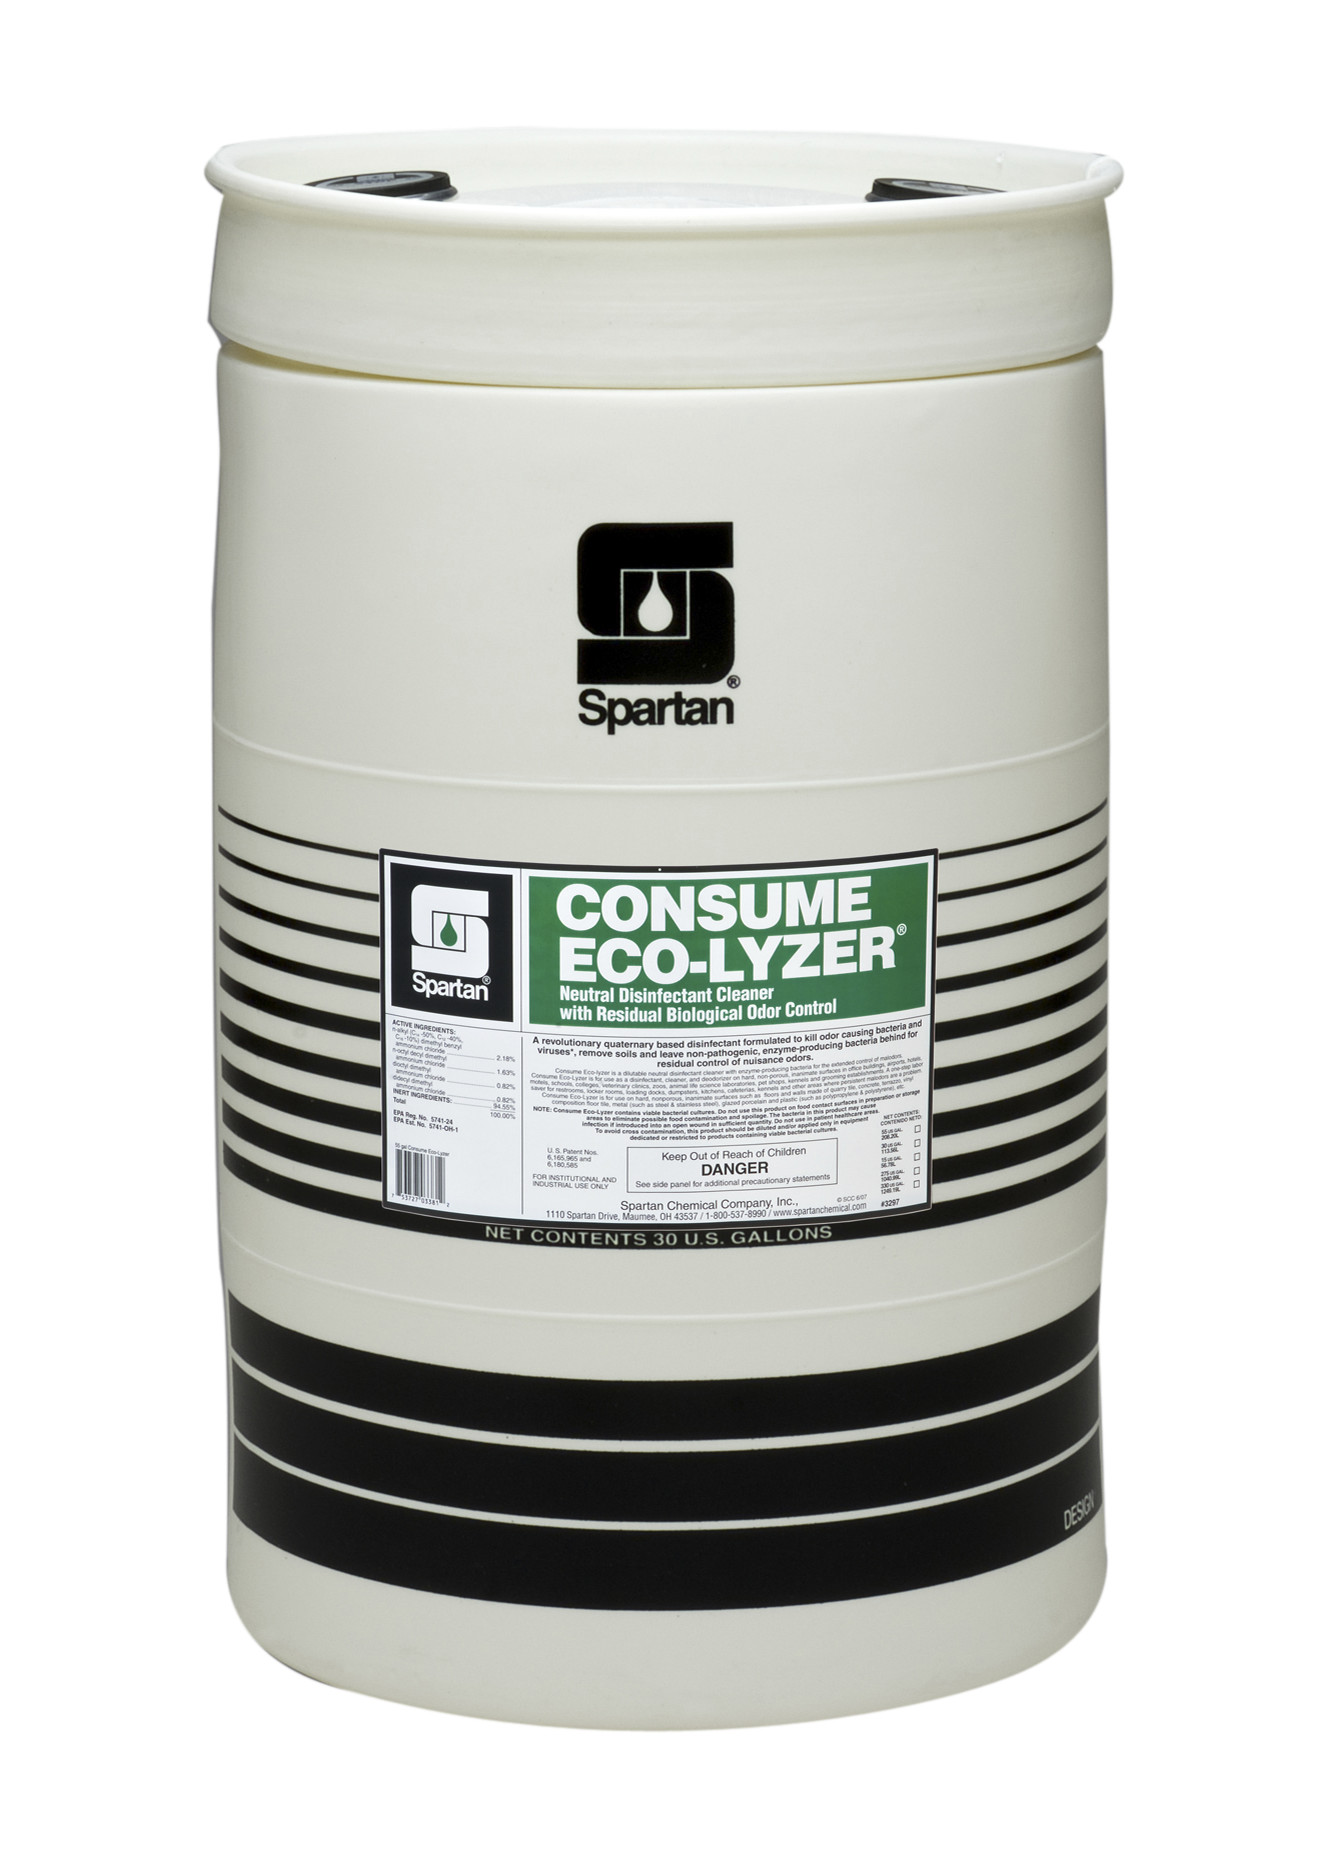 Spartan Chemical Company Consume Eco-Lyzer, 30 GAL DRUM